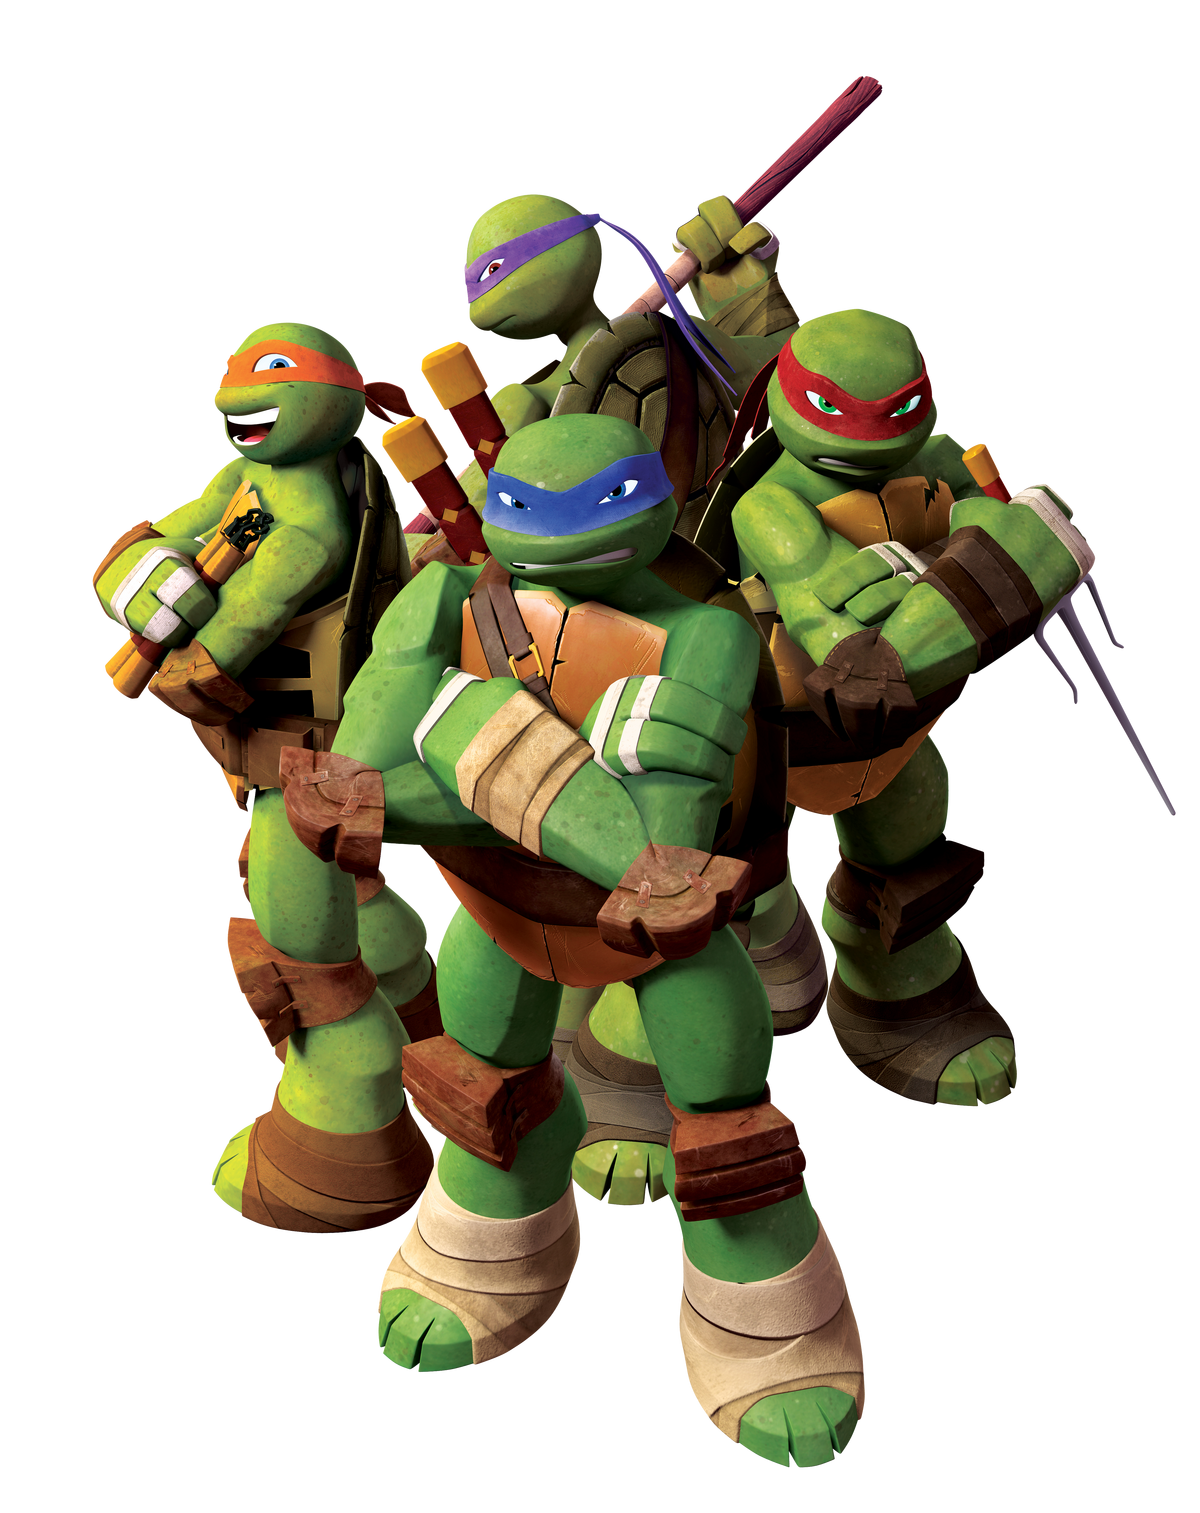 https://static.wikia.nocookie.net/teenage-mutant-ninja-turtles-2012-series/images/2/28/Ninja_Turtles_Profile.png/revision/latest/scale-to-width-down/1200?cb=20160311025207